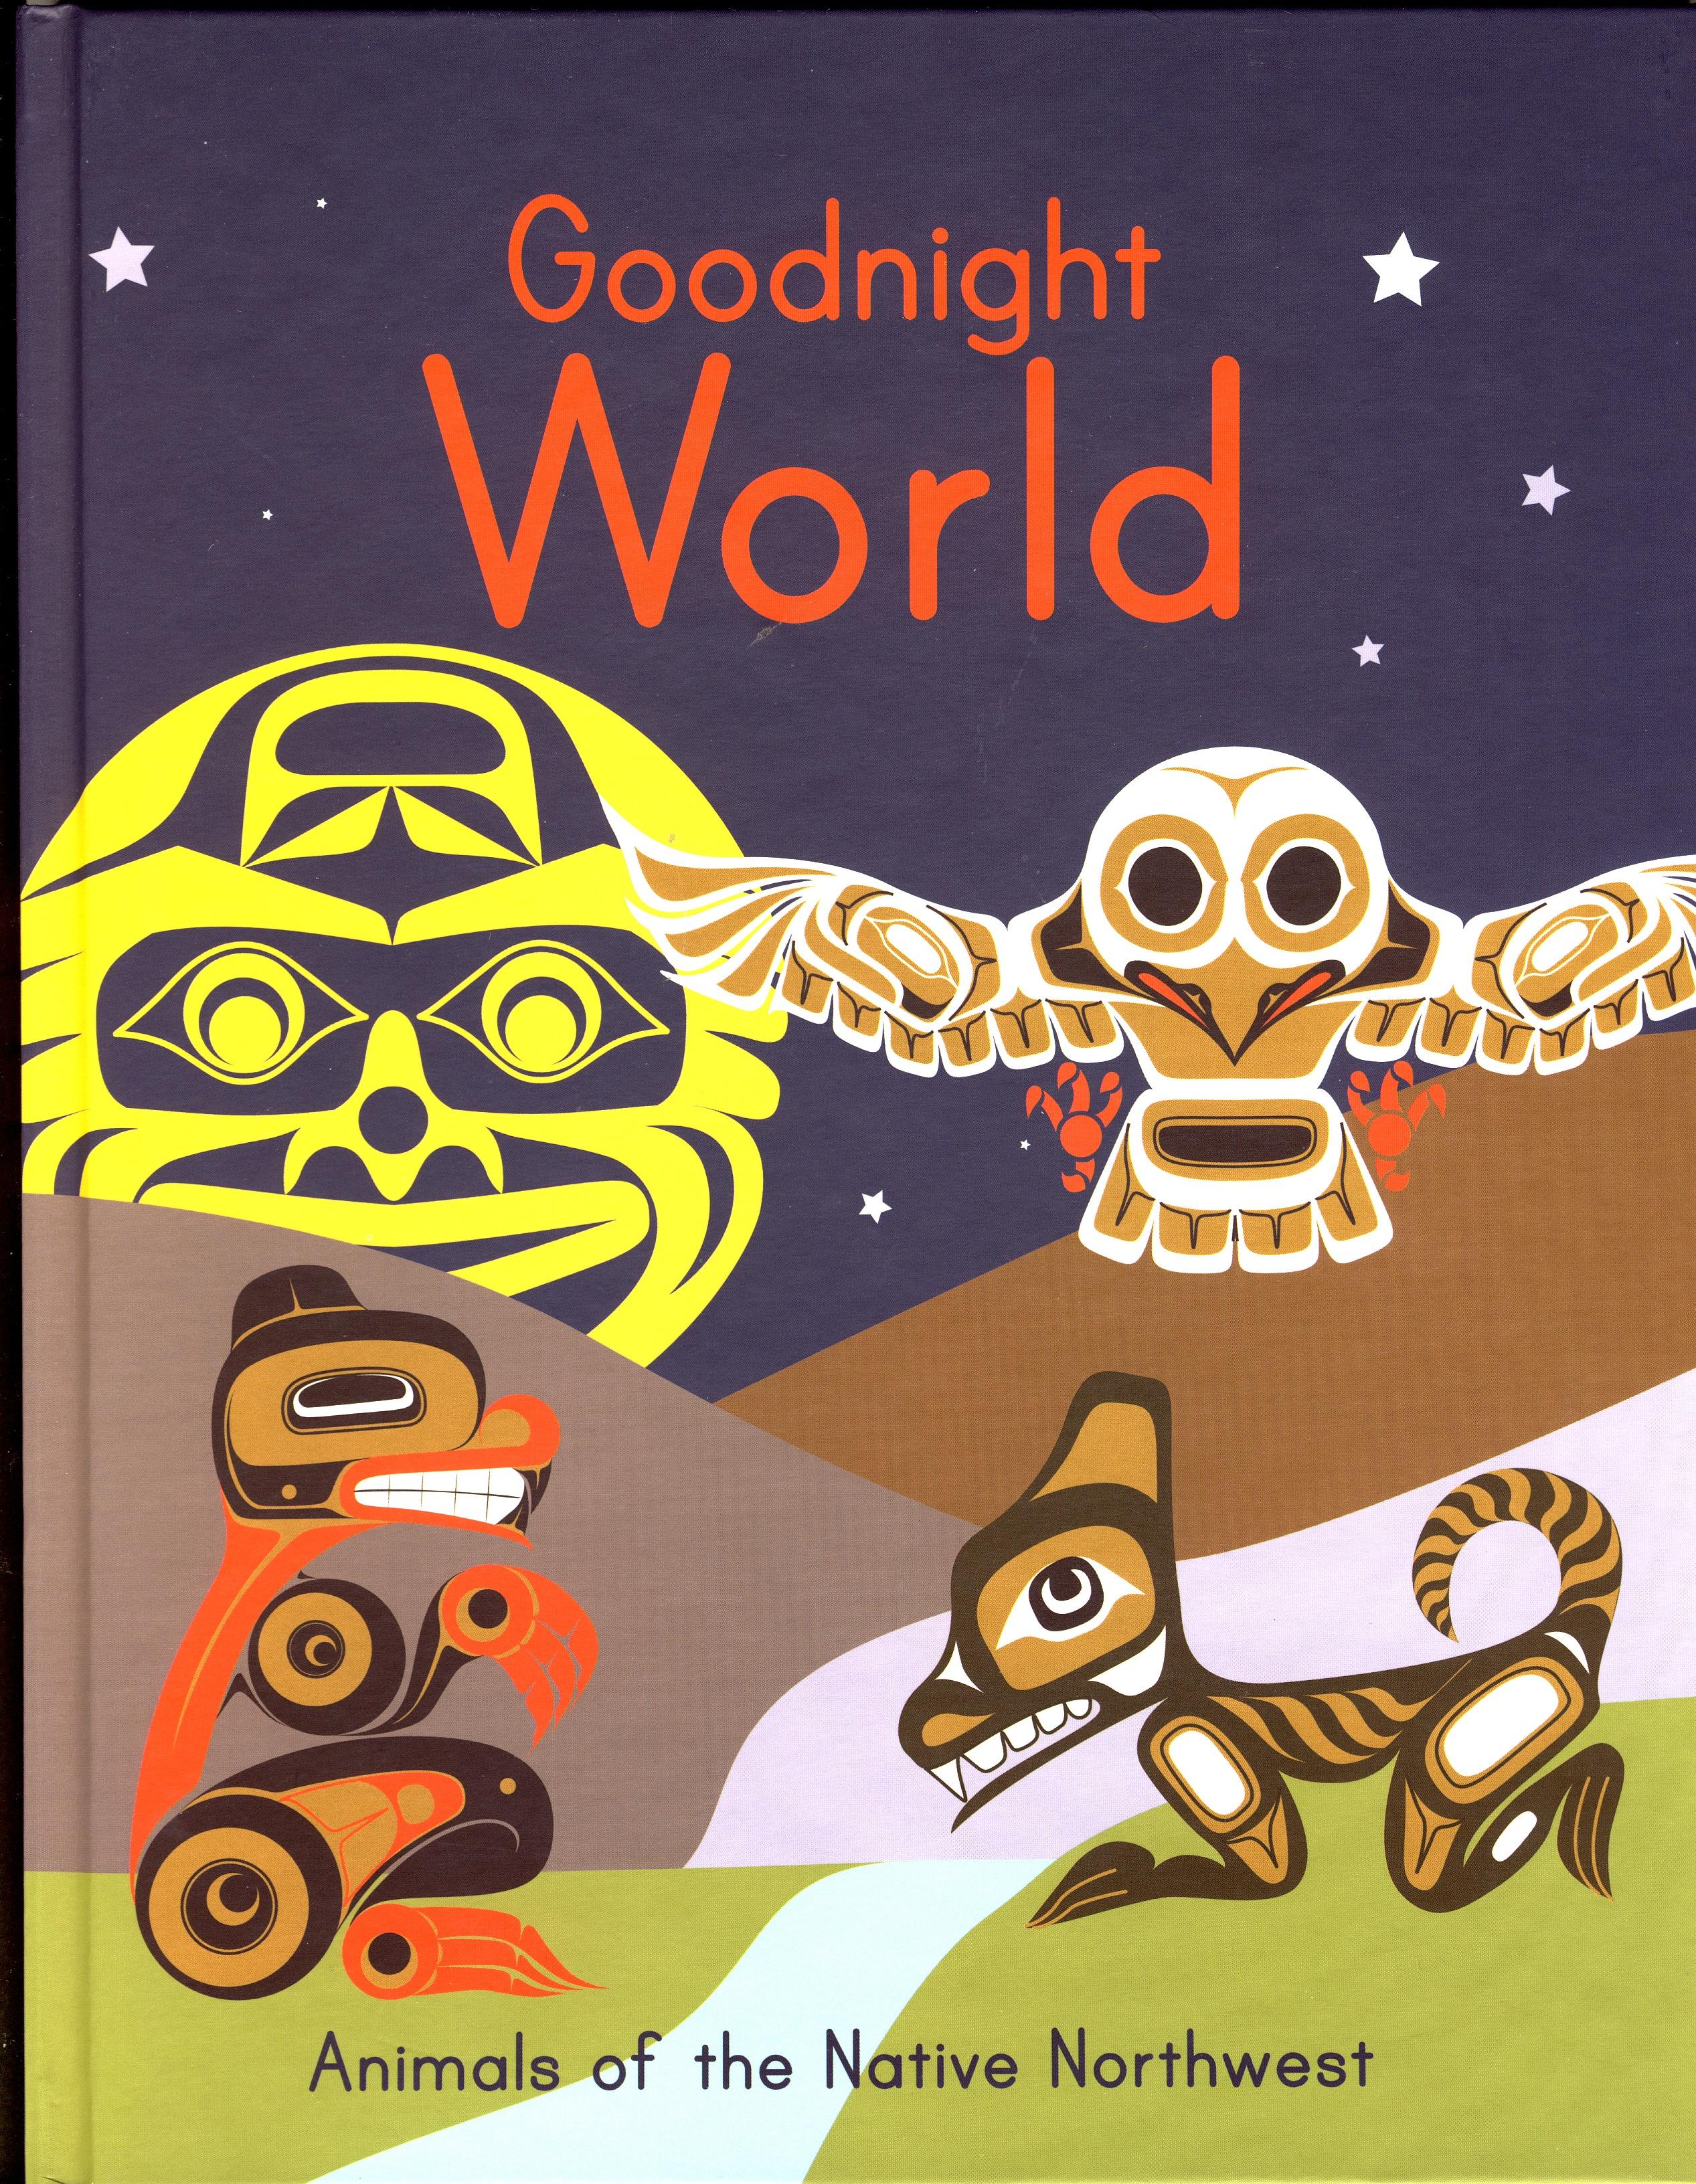 Good night world. Goodnight World.